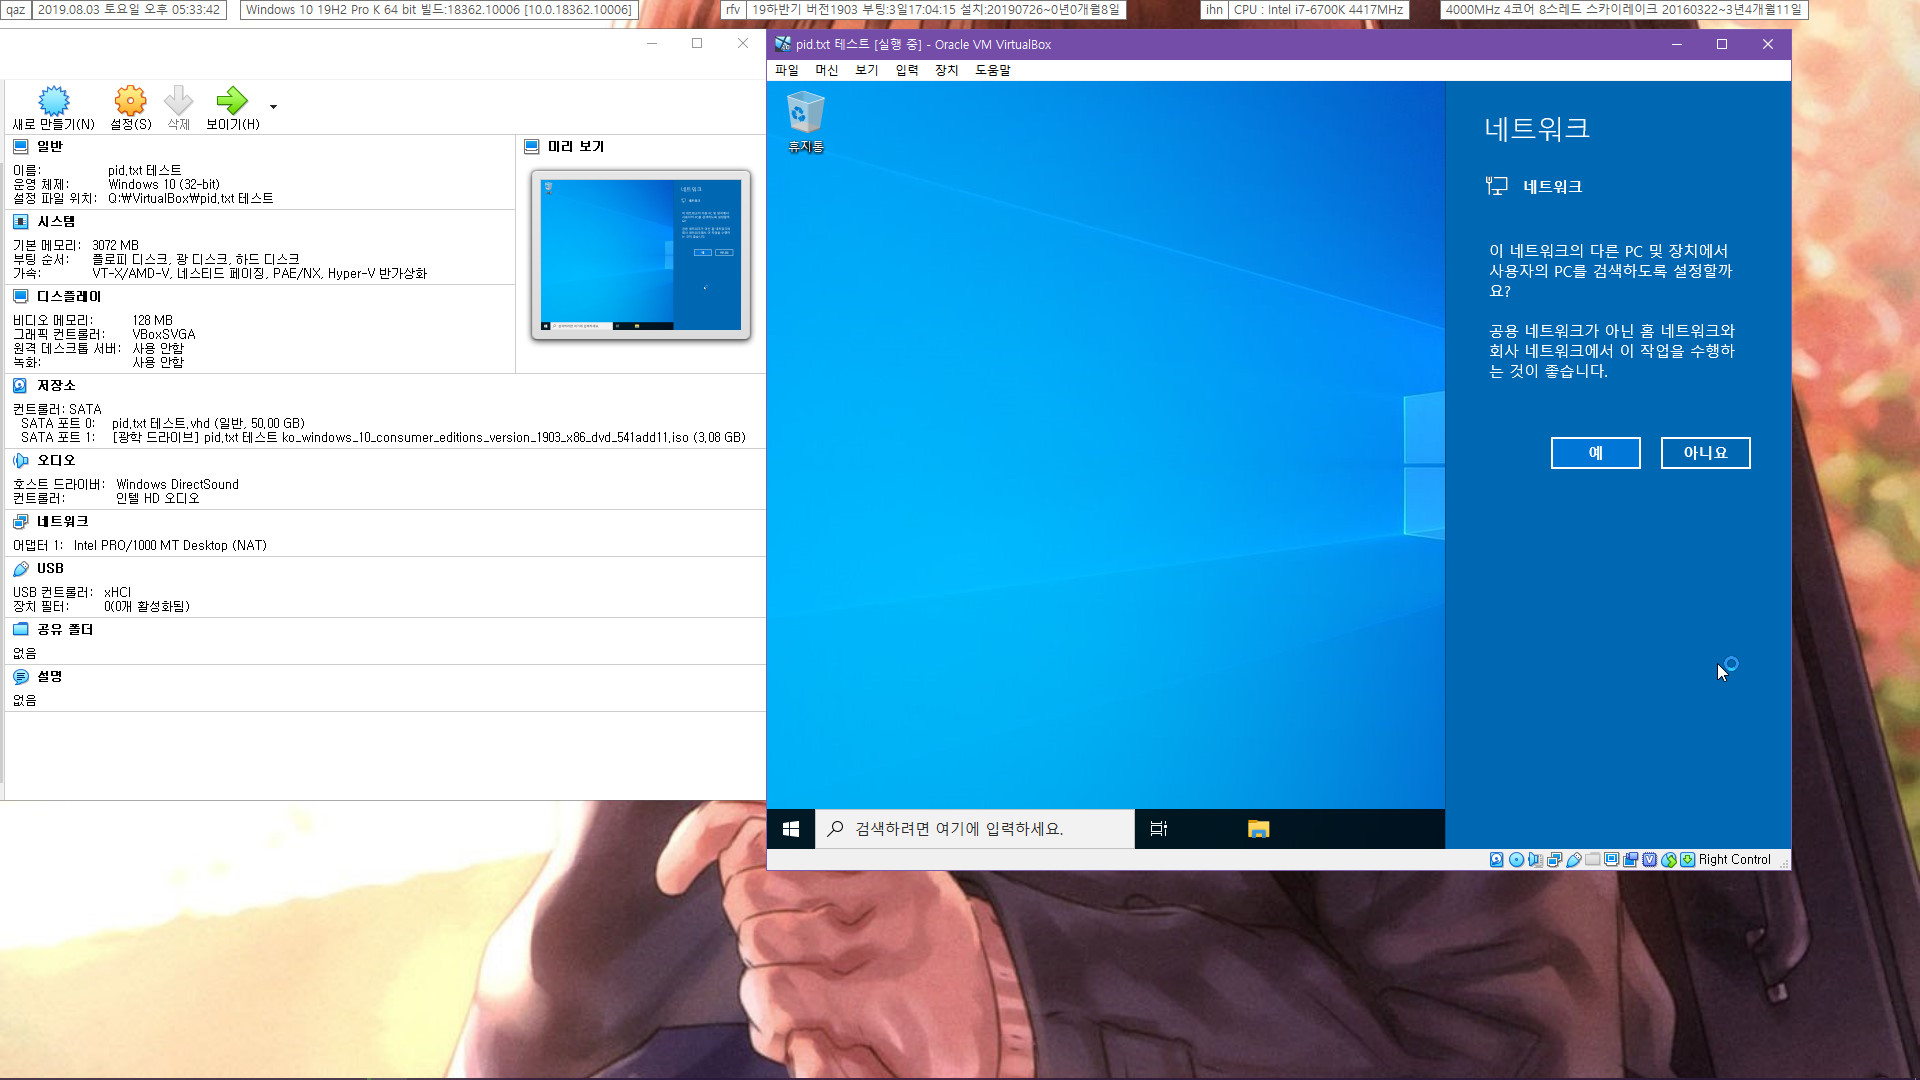 Windows 10 consumer 이미지에 pid.txt 로 볼륨 KMS 기본 키 입력하여 볼륨 윈도로 설치하기 - PRO - 2019-08-03_173342.jpg